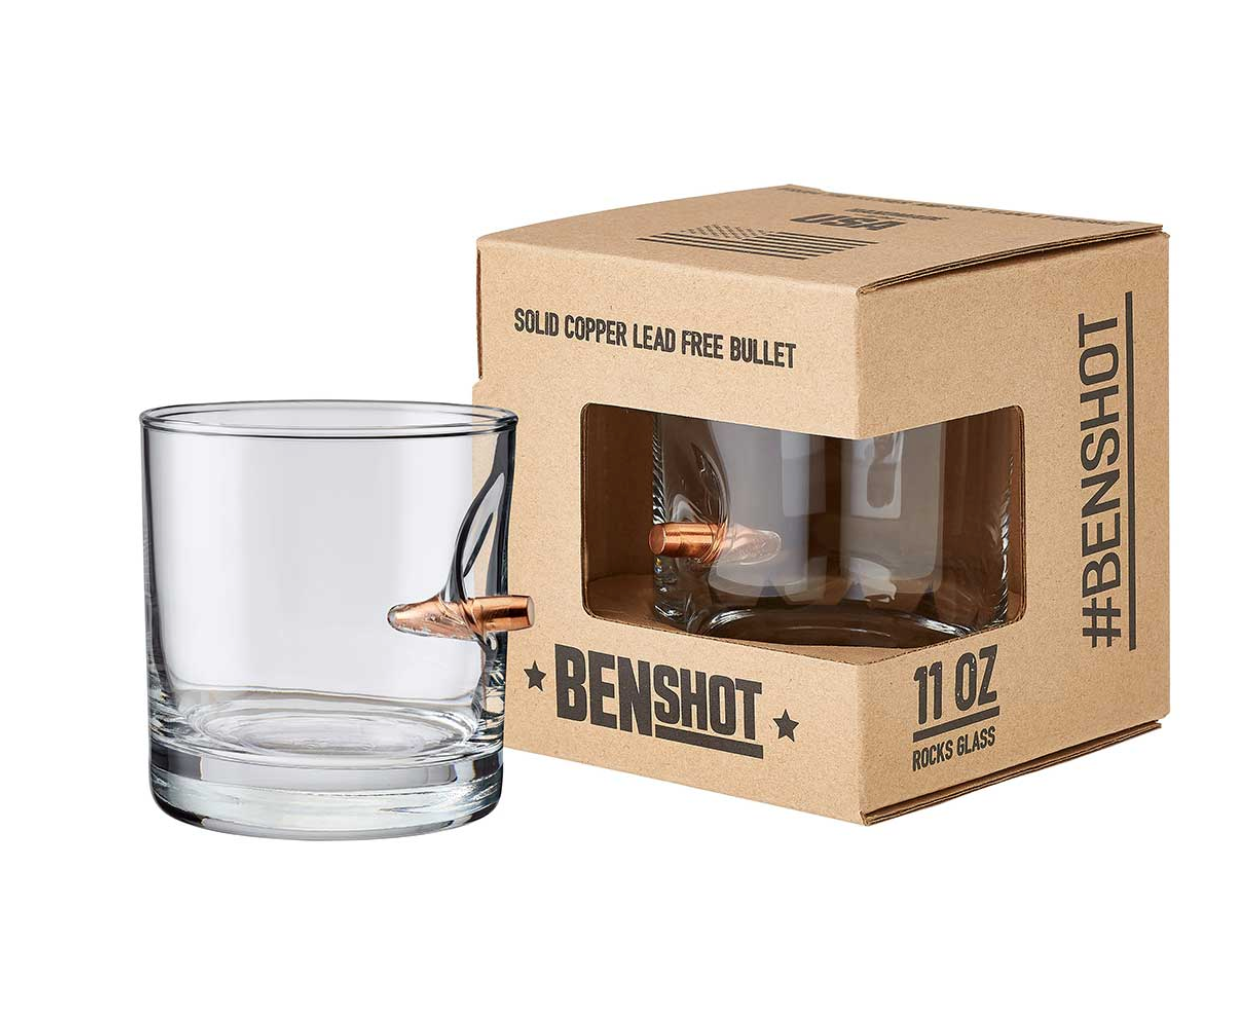 BenShot Beer Mug with Real .50 Caliber Bullet - Made in The USA